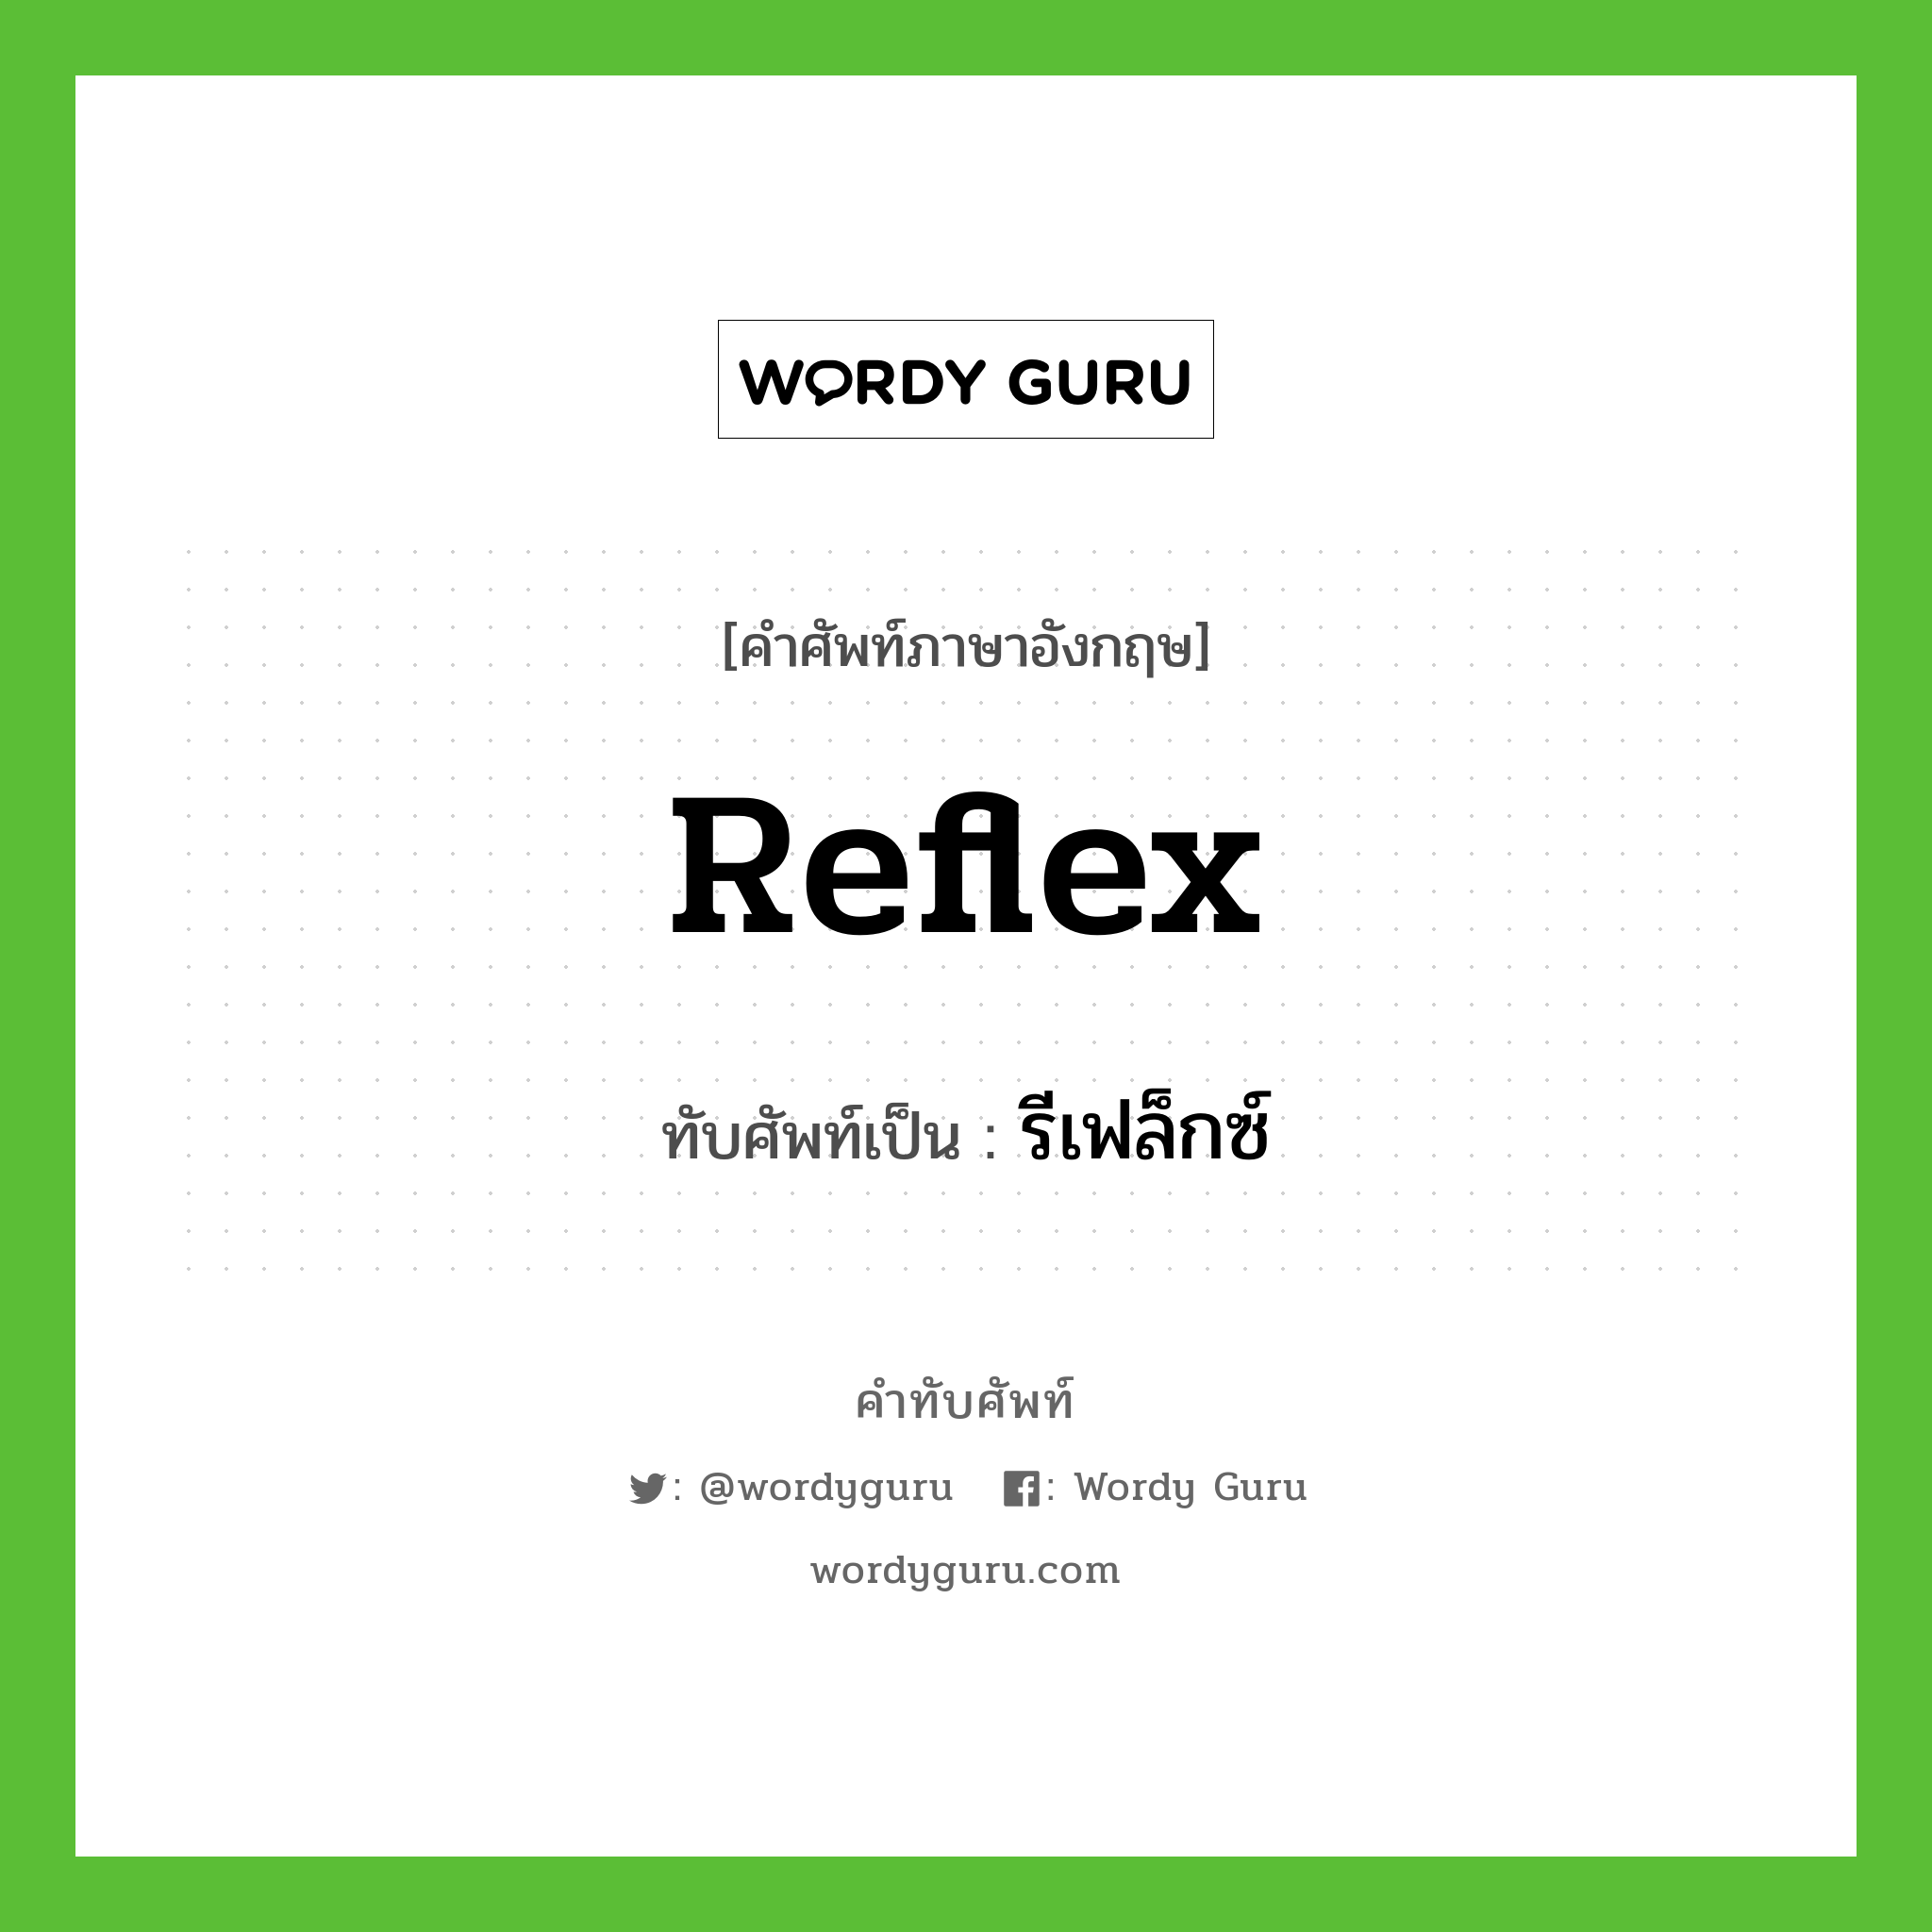 reflex เขียนเป็นคำไทยว่าอะไร?, คำศัพท์ภาษาอังกฤษ reflex ทับศัพท์เป็น รีเฟล็กซ์